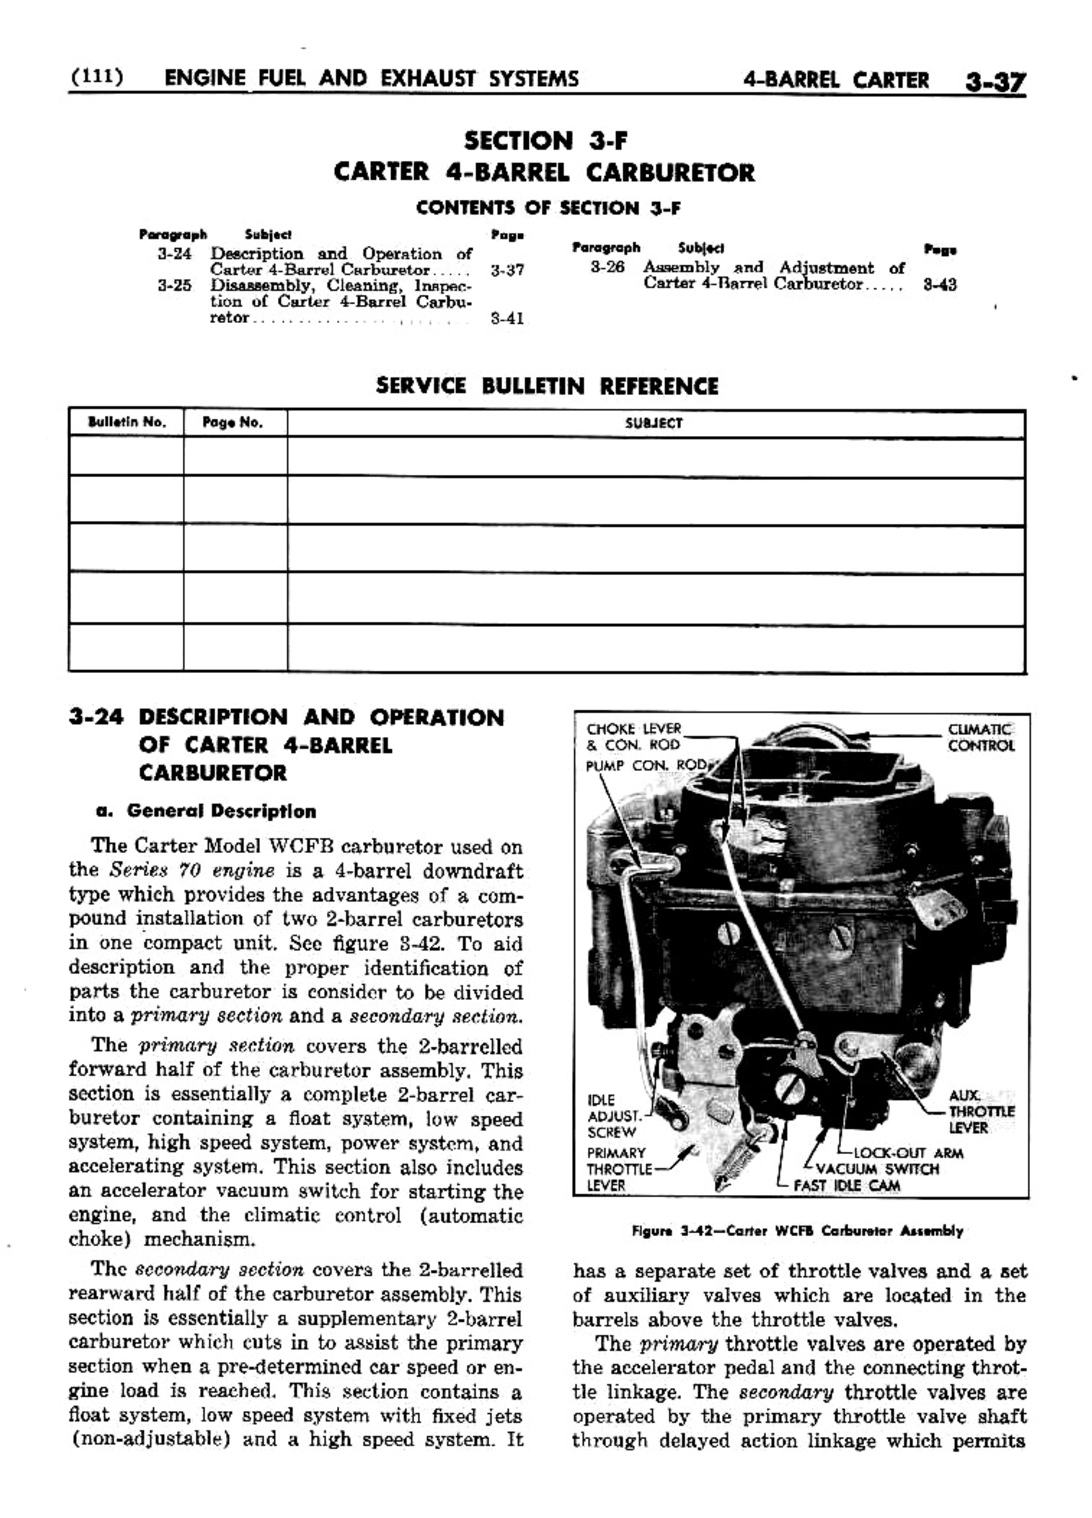 n_04 1952 Buick Shop Manual - Engine Fuel & Exhaust-037-037.jpg